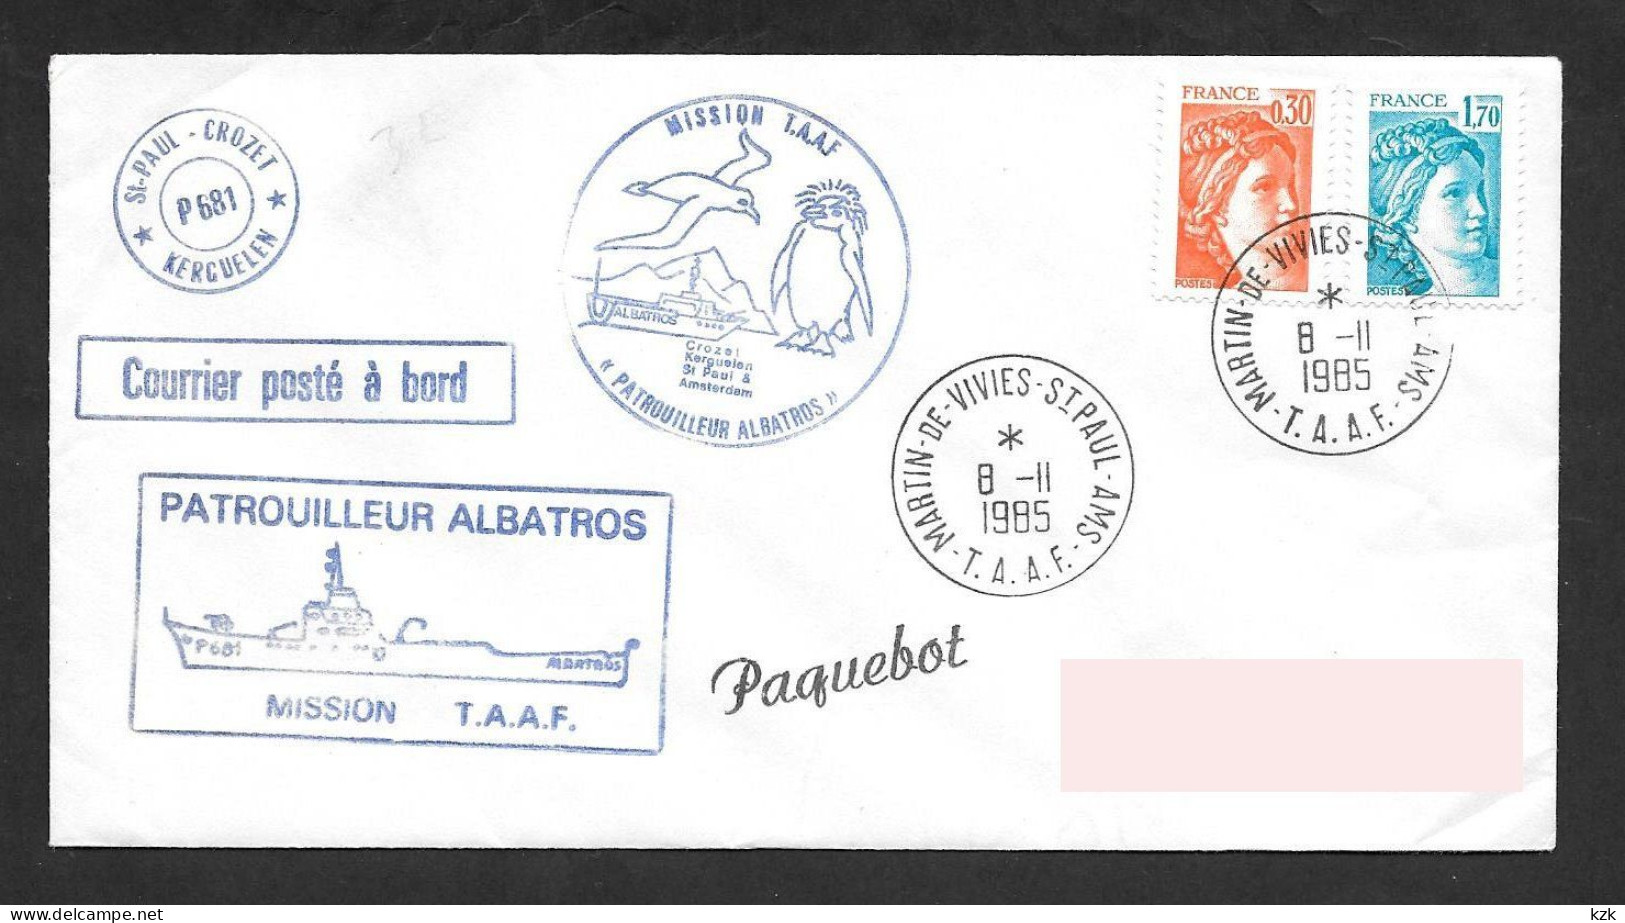 2 04	395	-	Pat. Albatros - Martin-de-Vivies 8/11/1985 - Naval Post